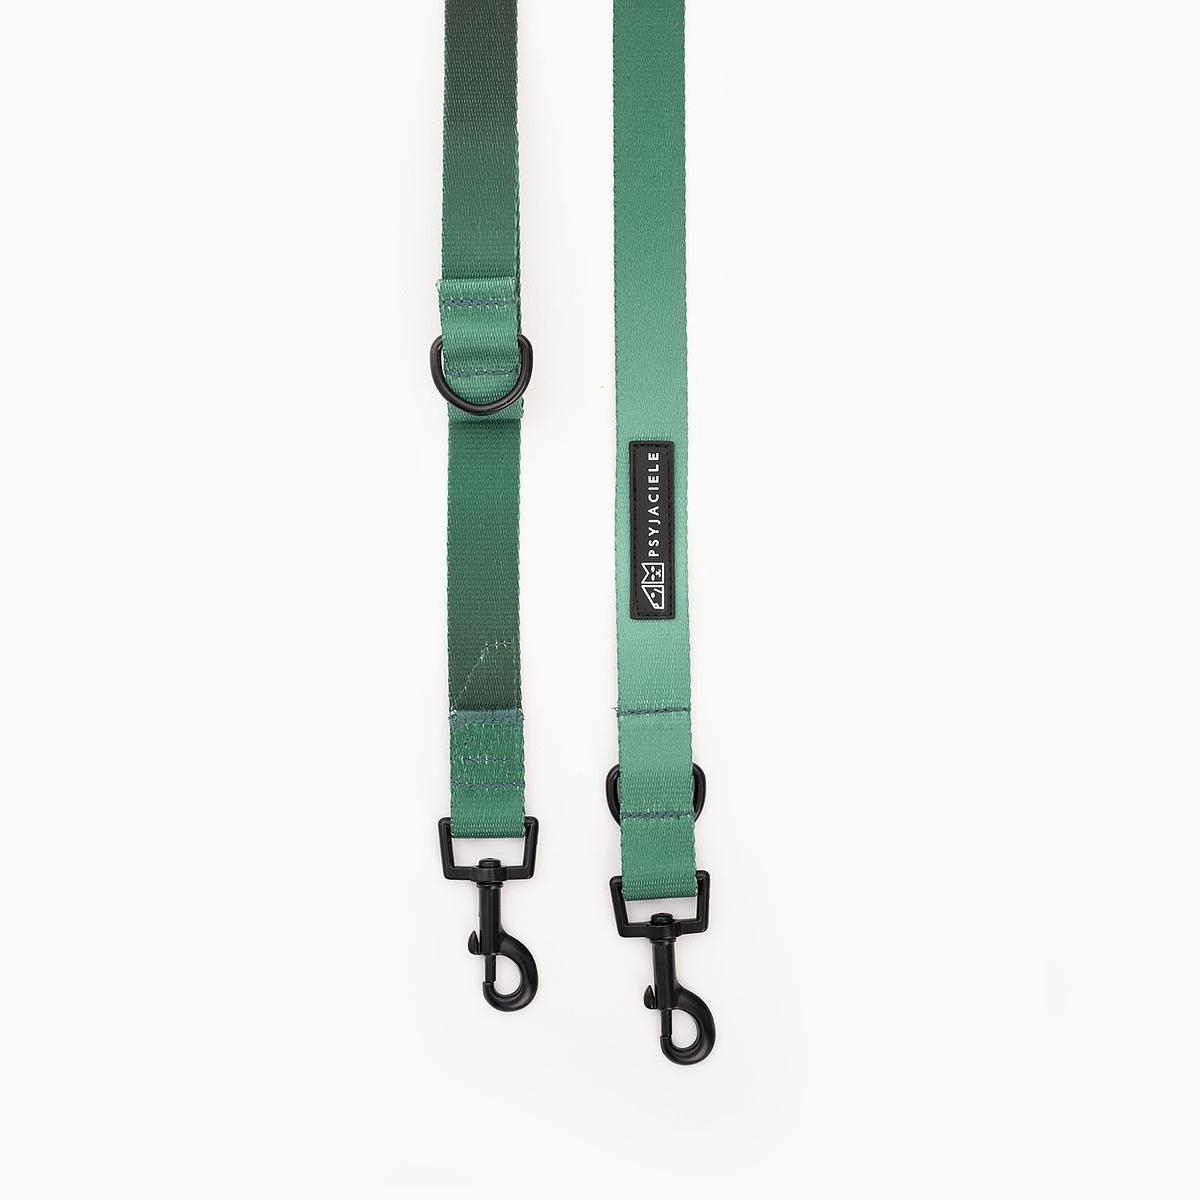 Adjustable leash "Under my umbrella" green 